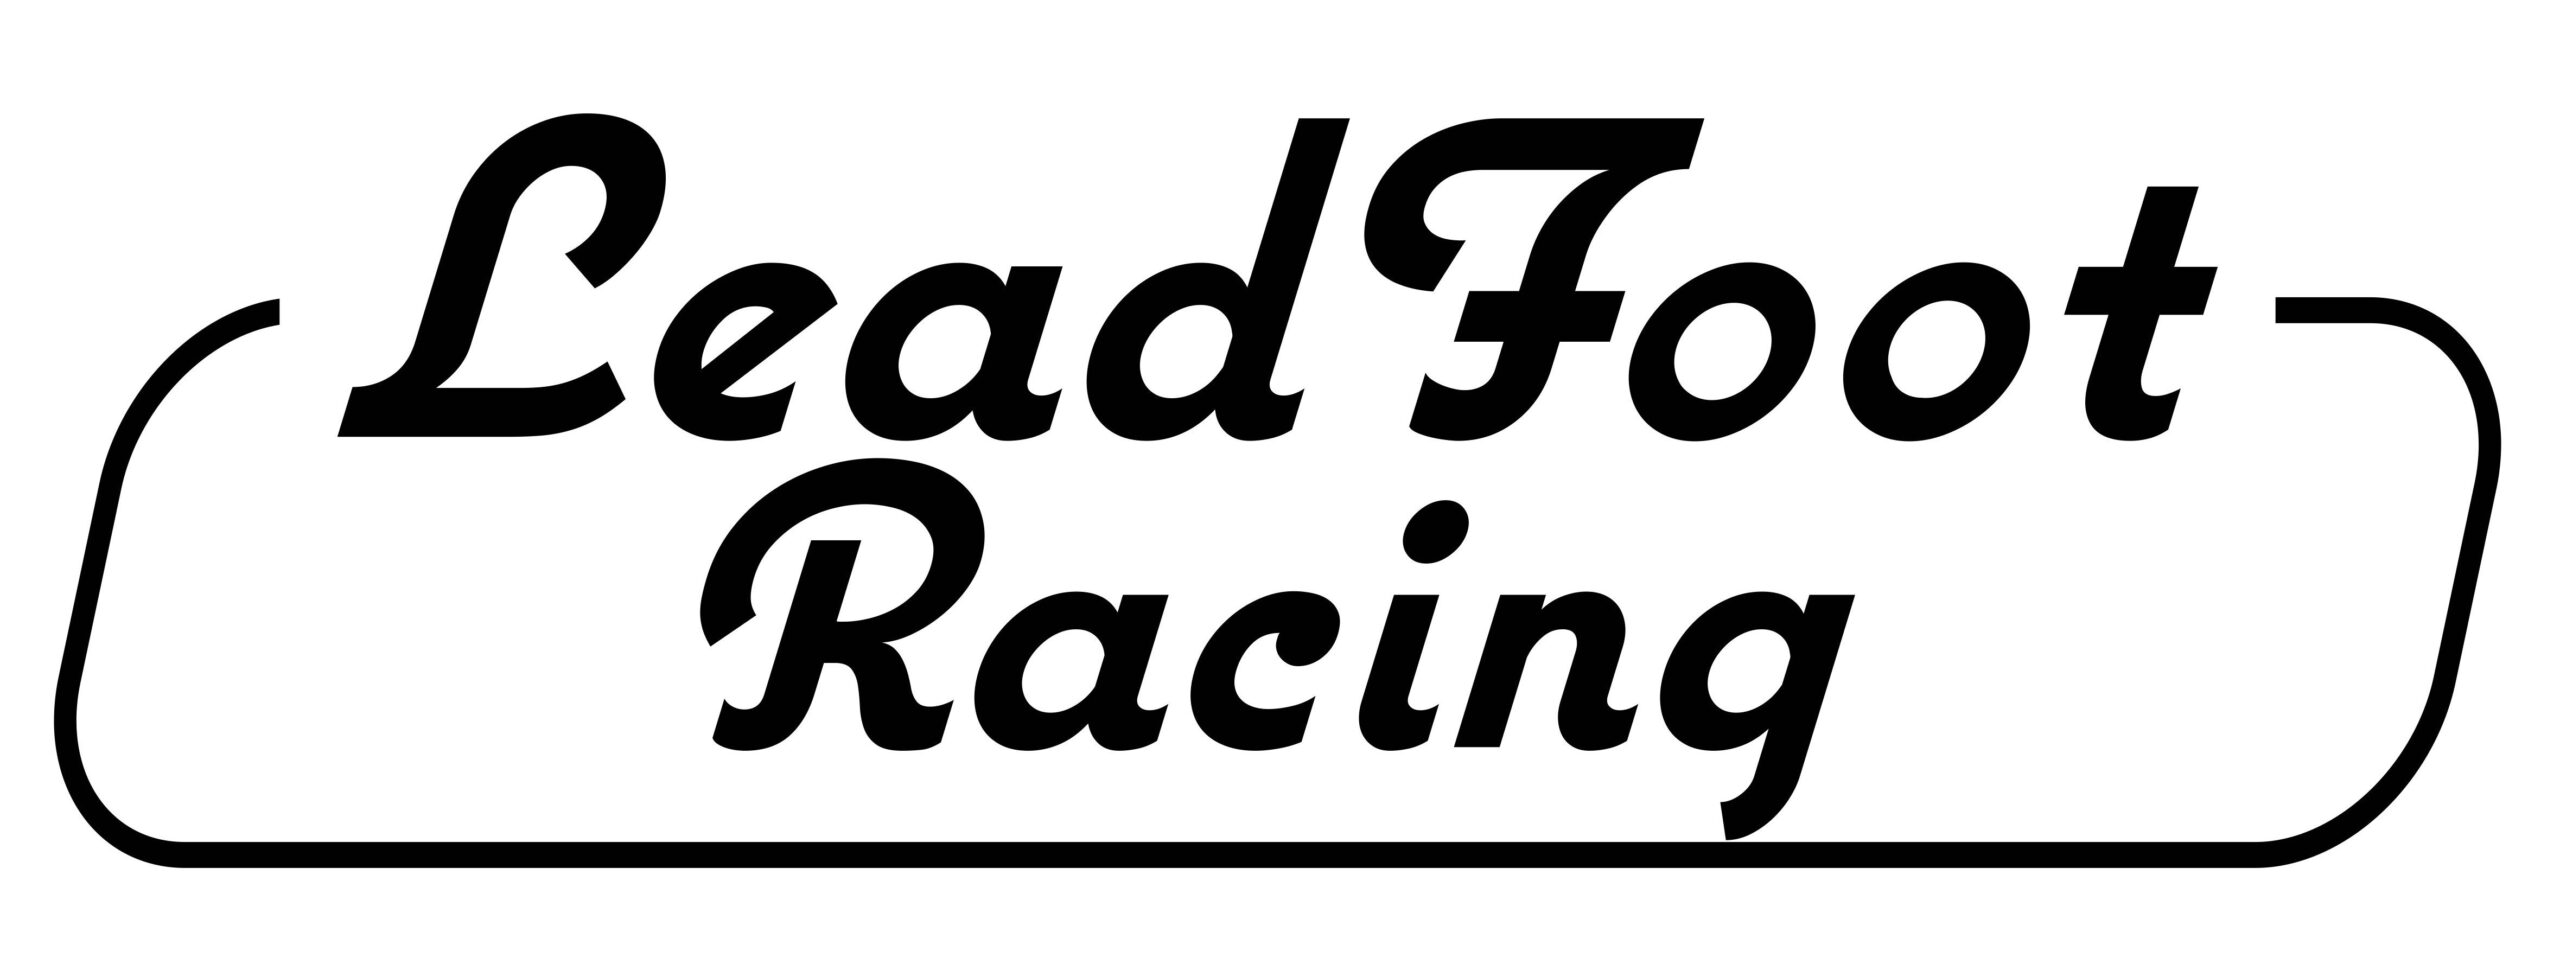 Leadfoot racing logo